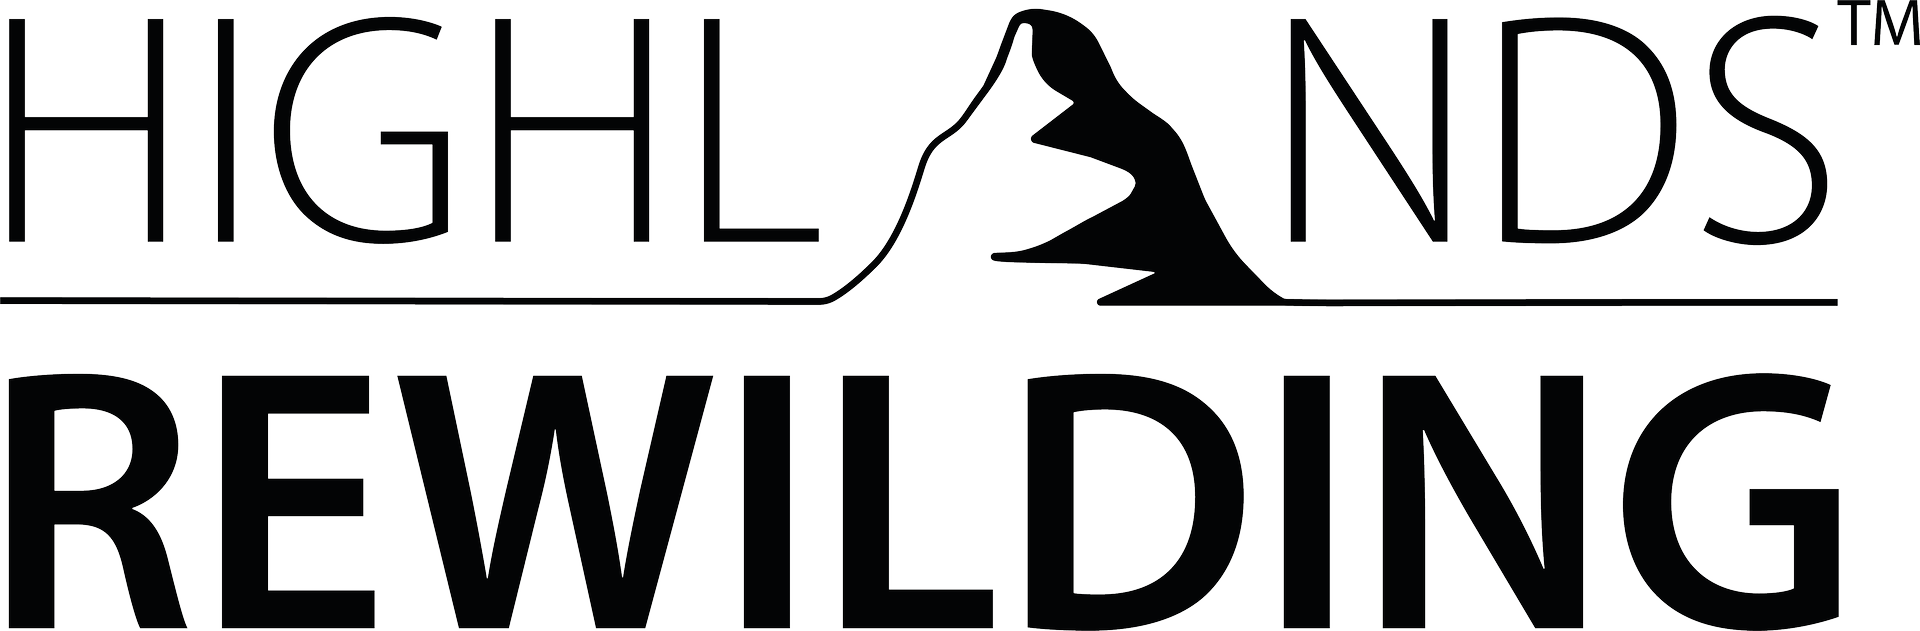 Highlands Rewilding Ltd logo